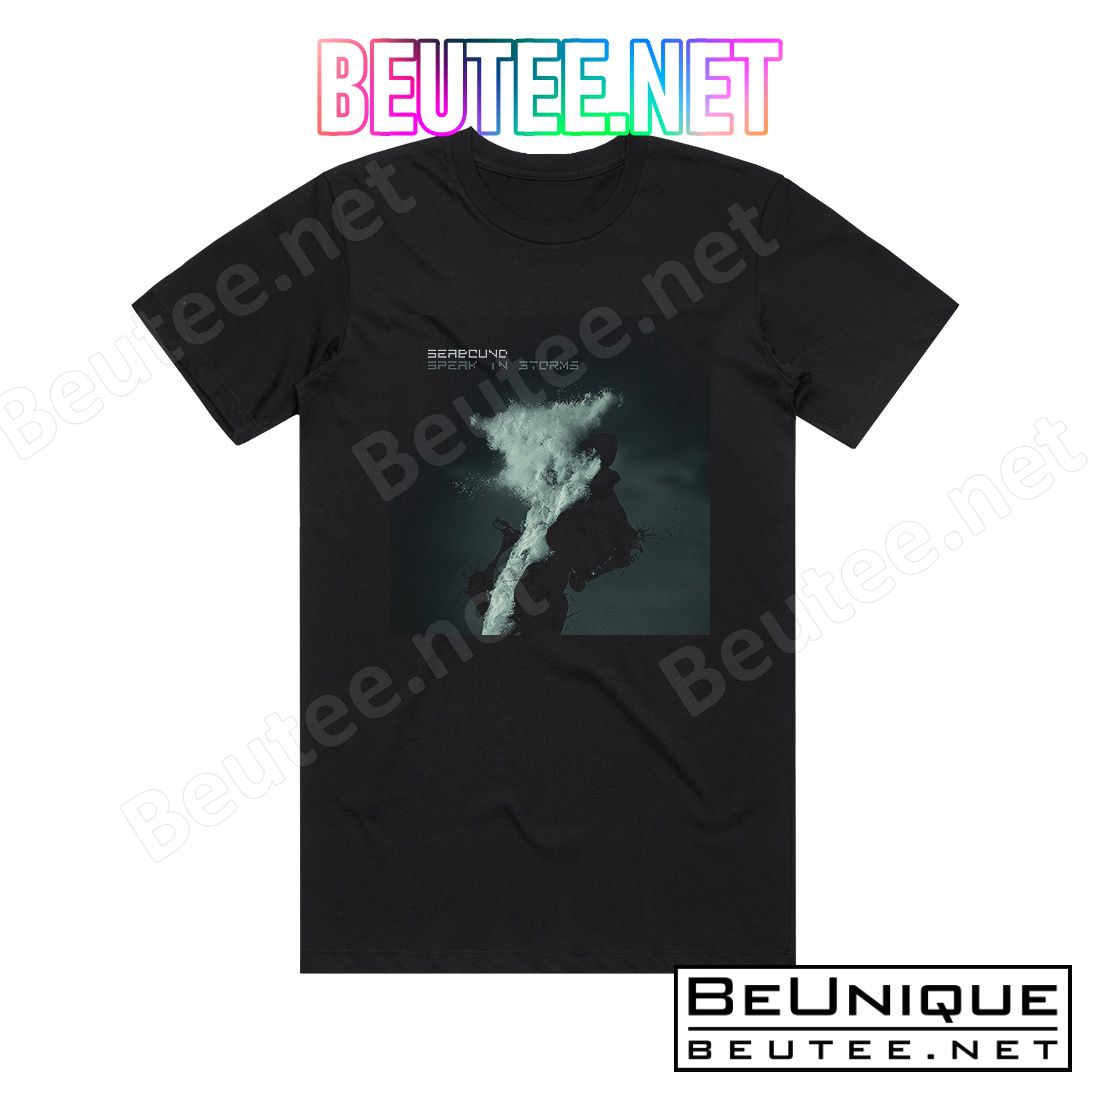 Seabound Speak In Storms Album Cover T-Shirt